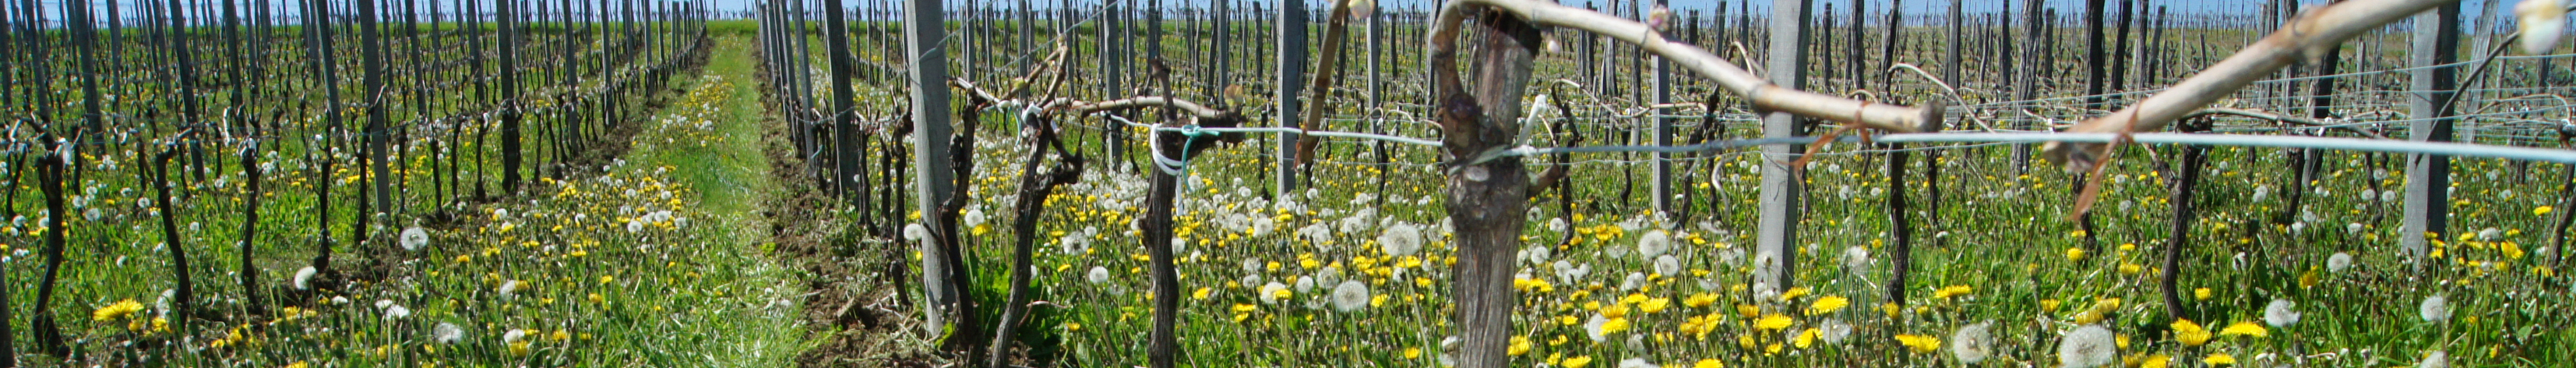 Vines - 2016 Spring at Château Argadens